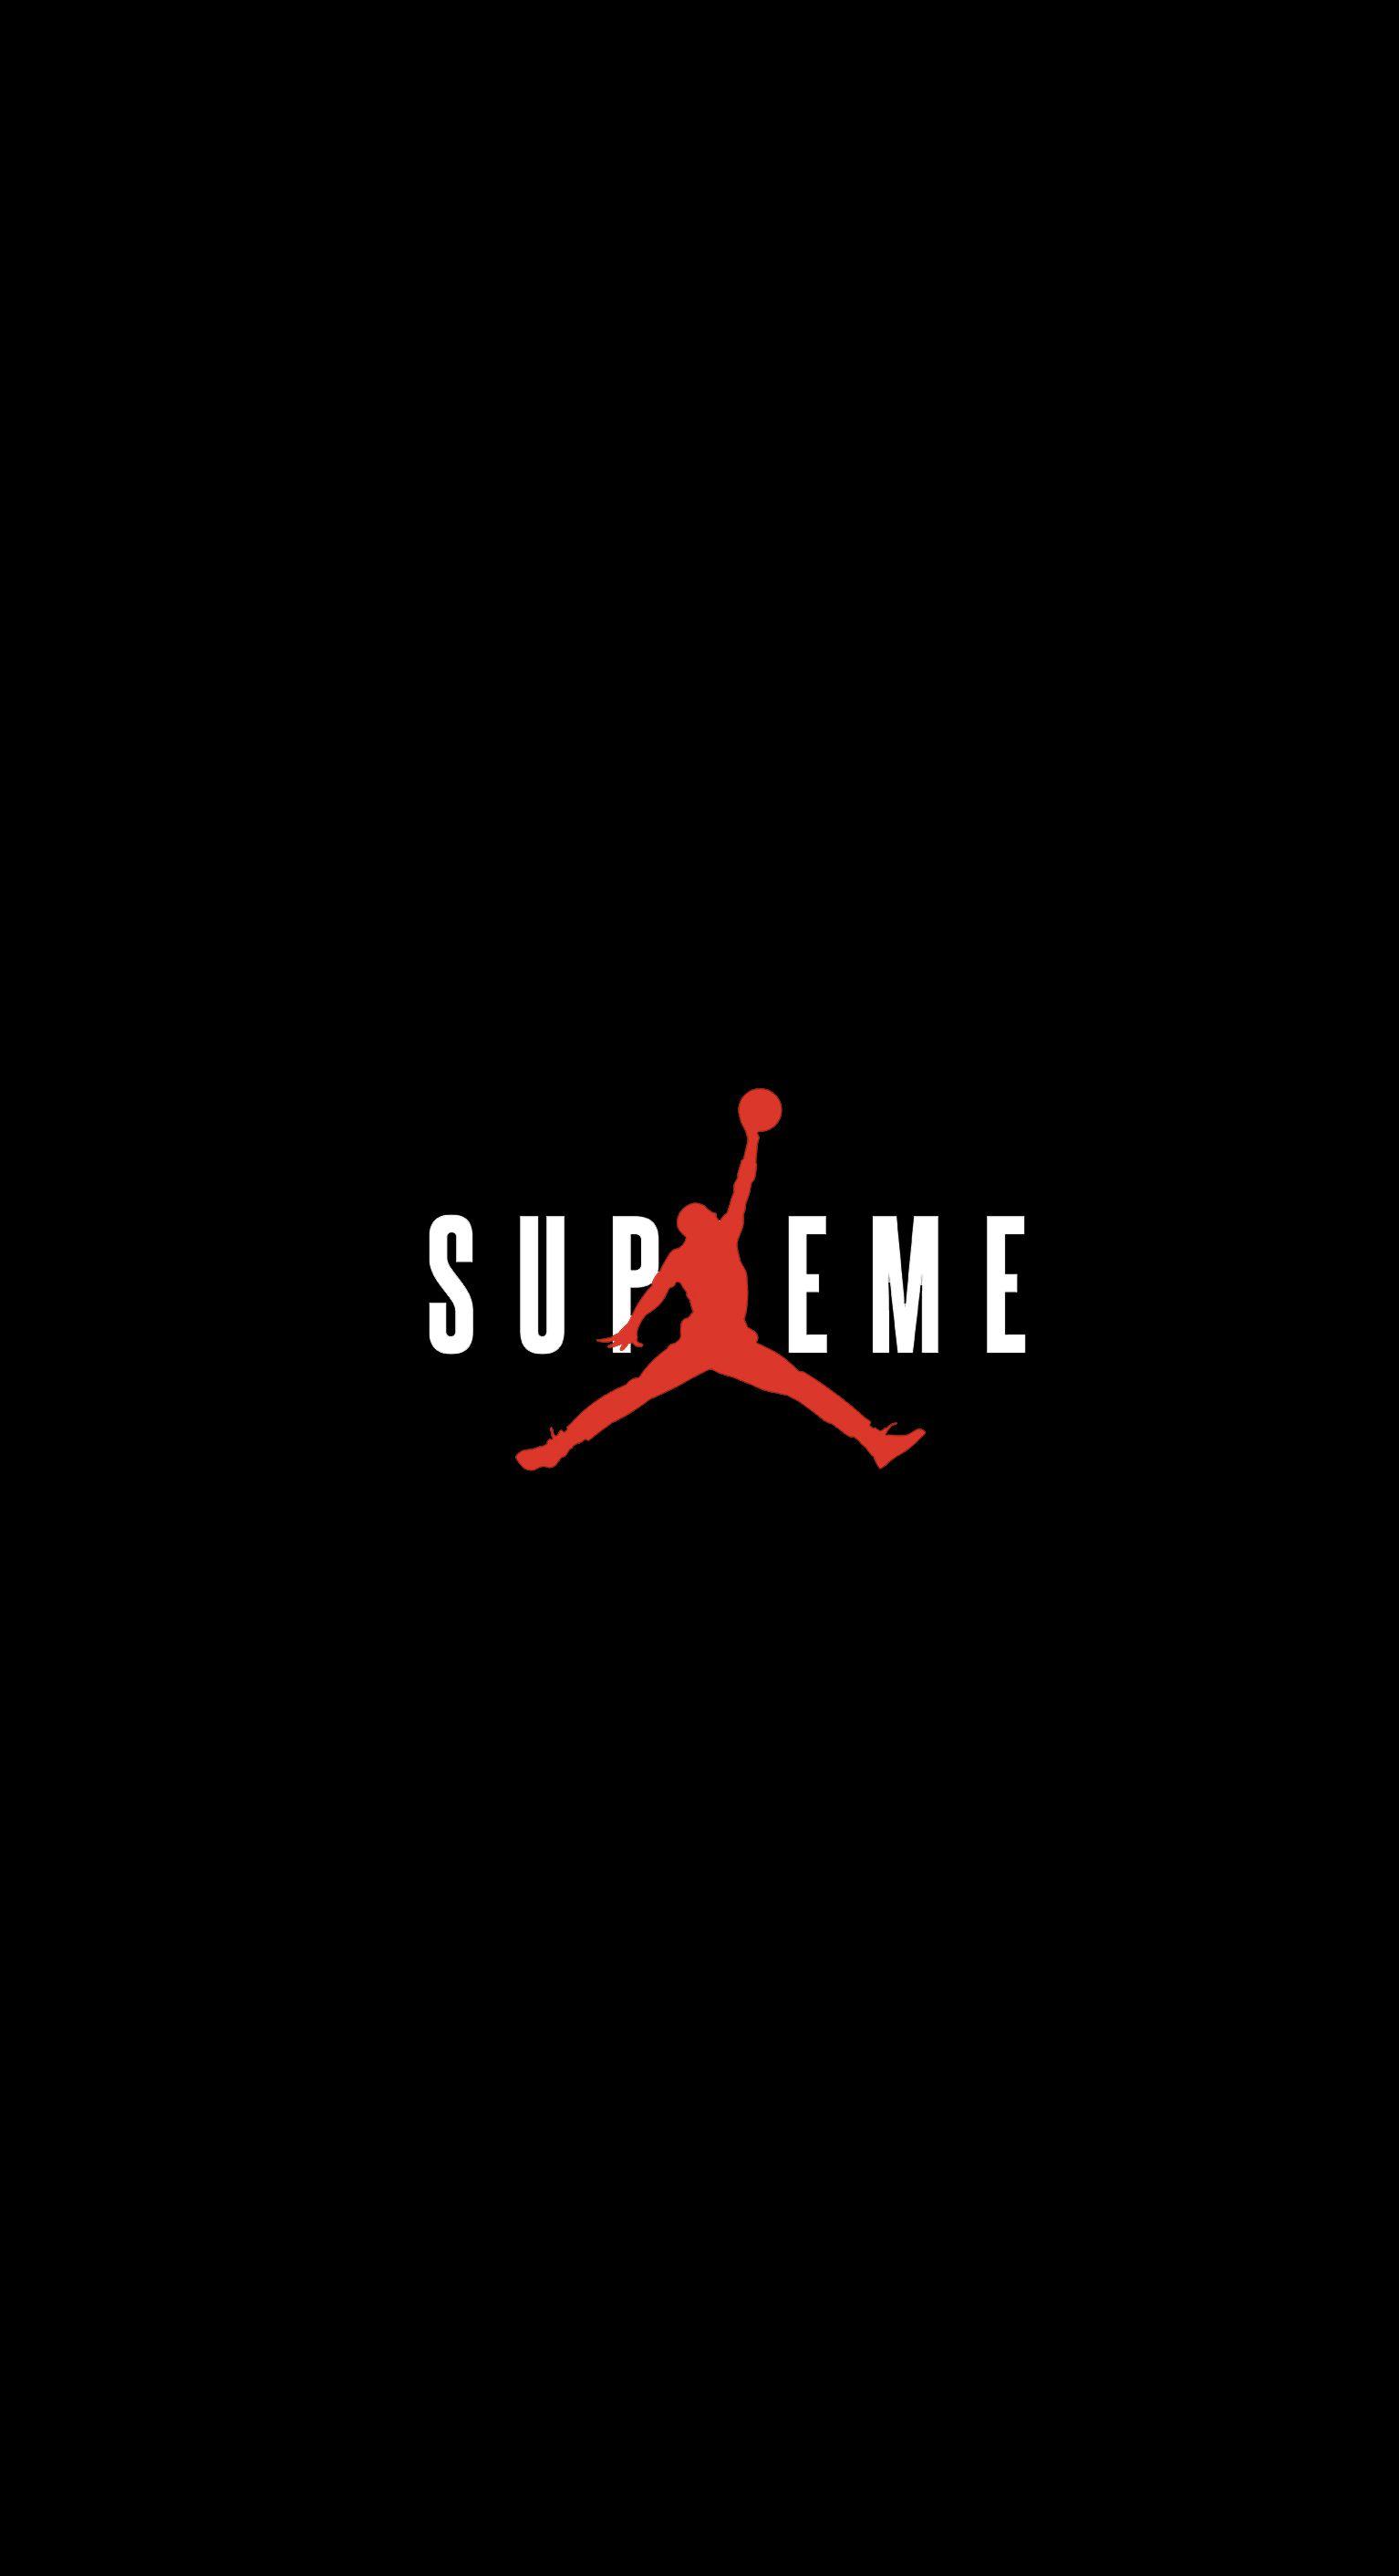 Awesome Supreme Logo - Supreme Logo Wallpapers - Wallpaper Cave